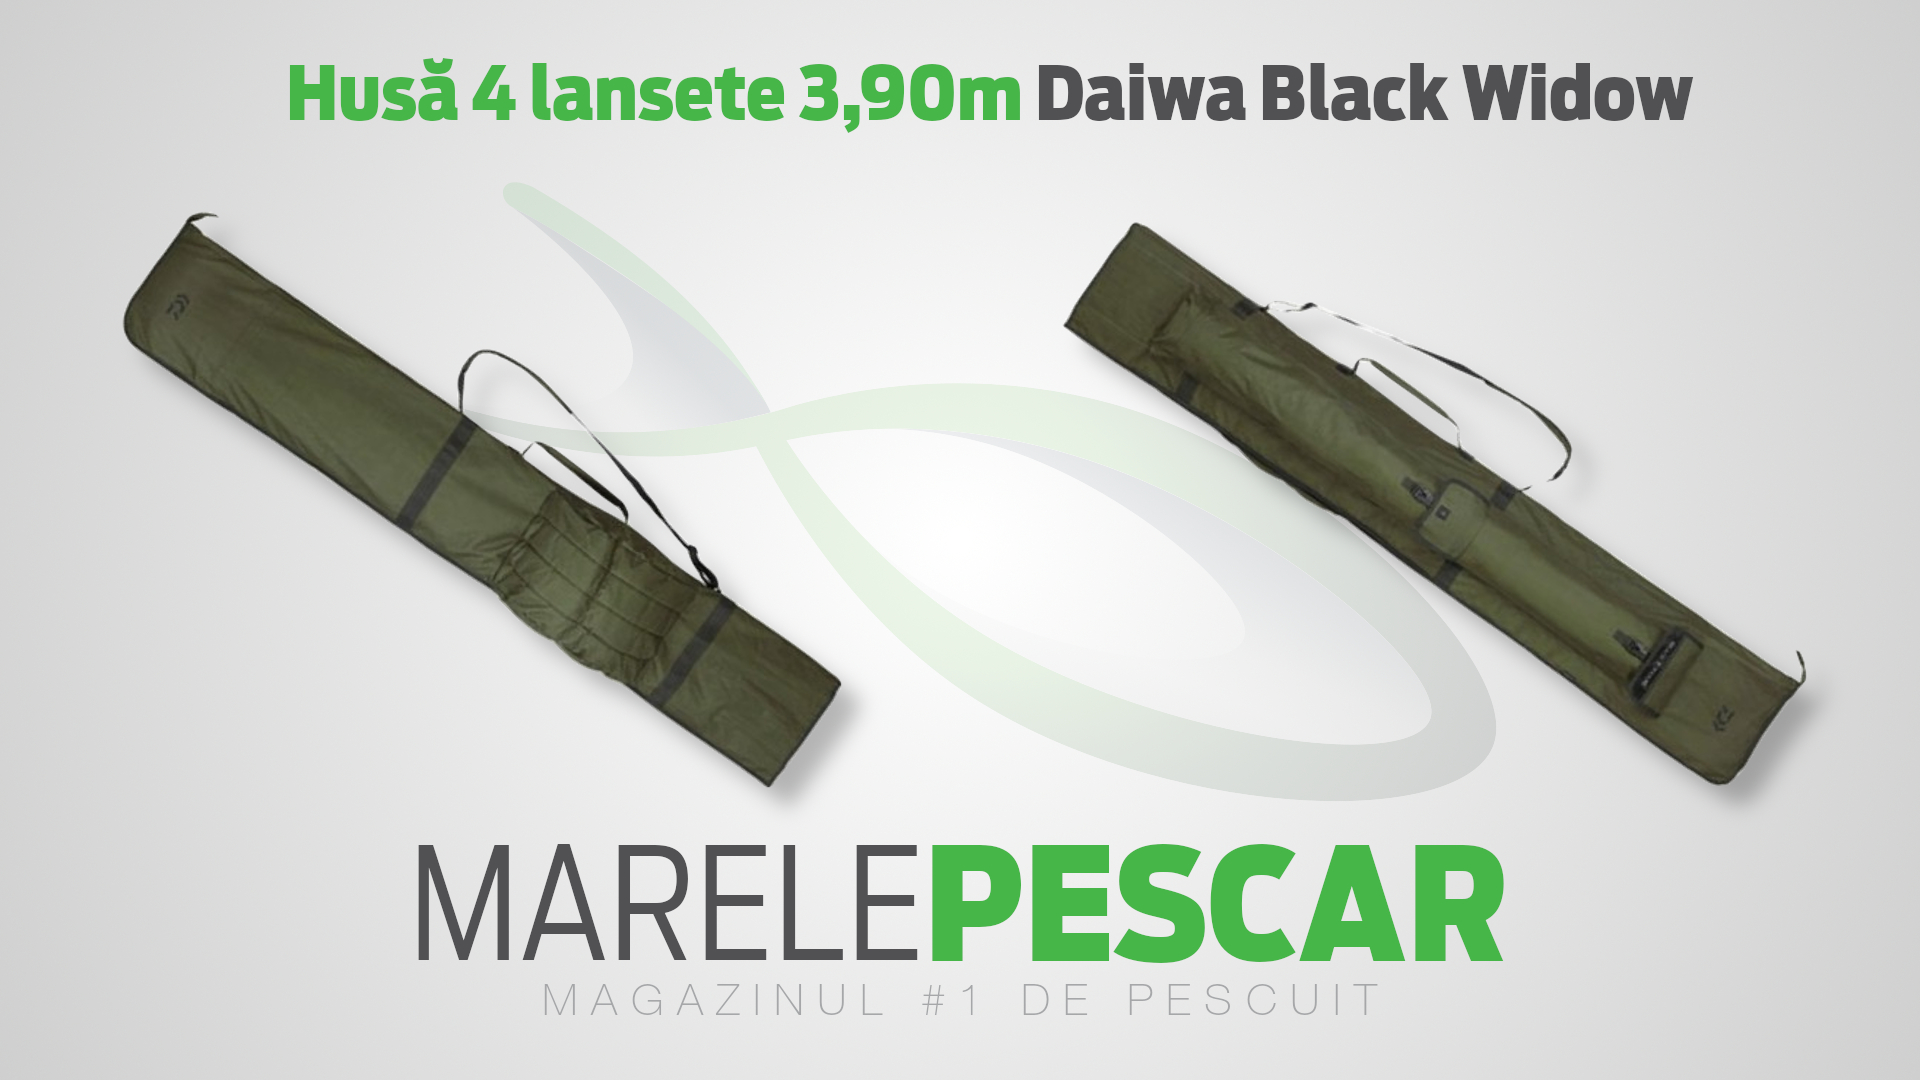 Husă 4 lansete 3,90m Daiwa Black Widow